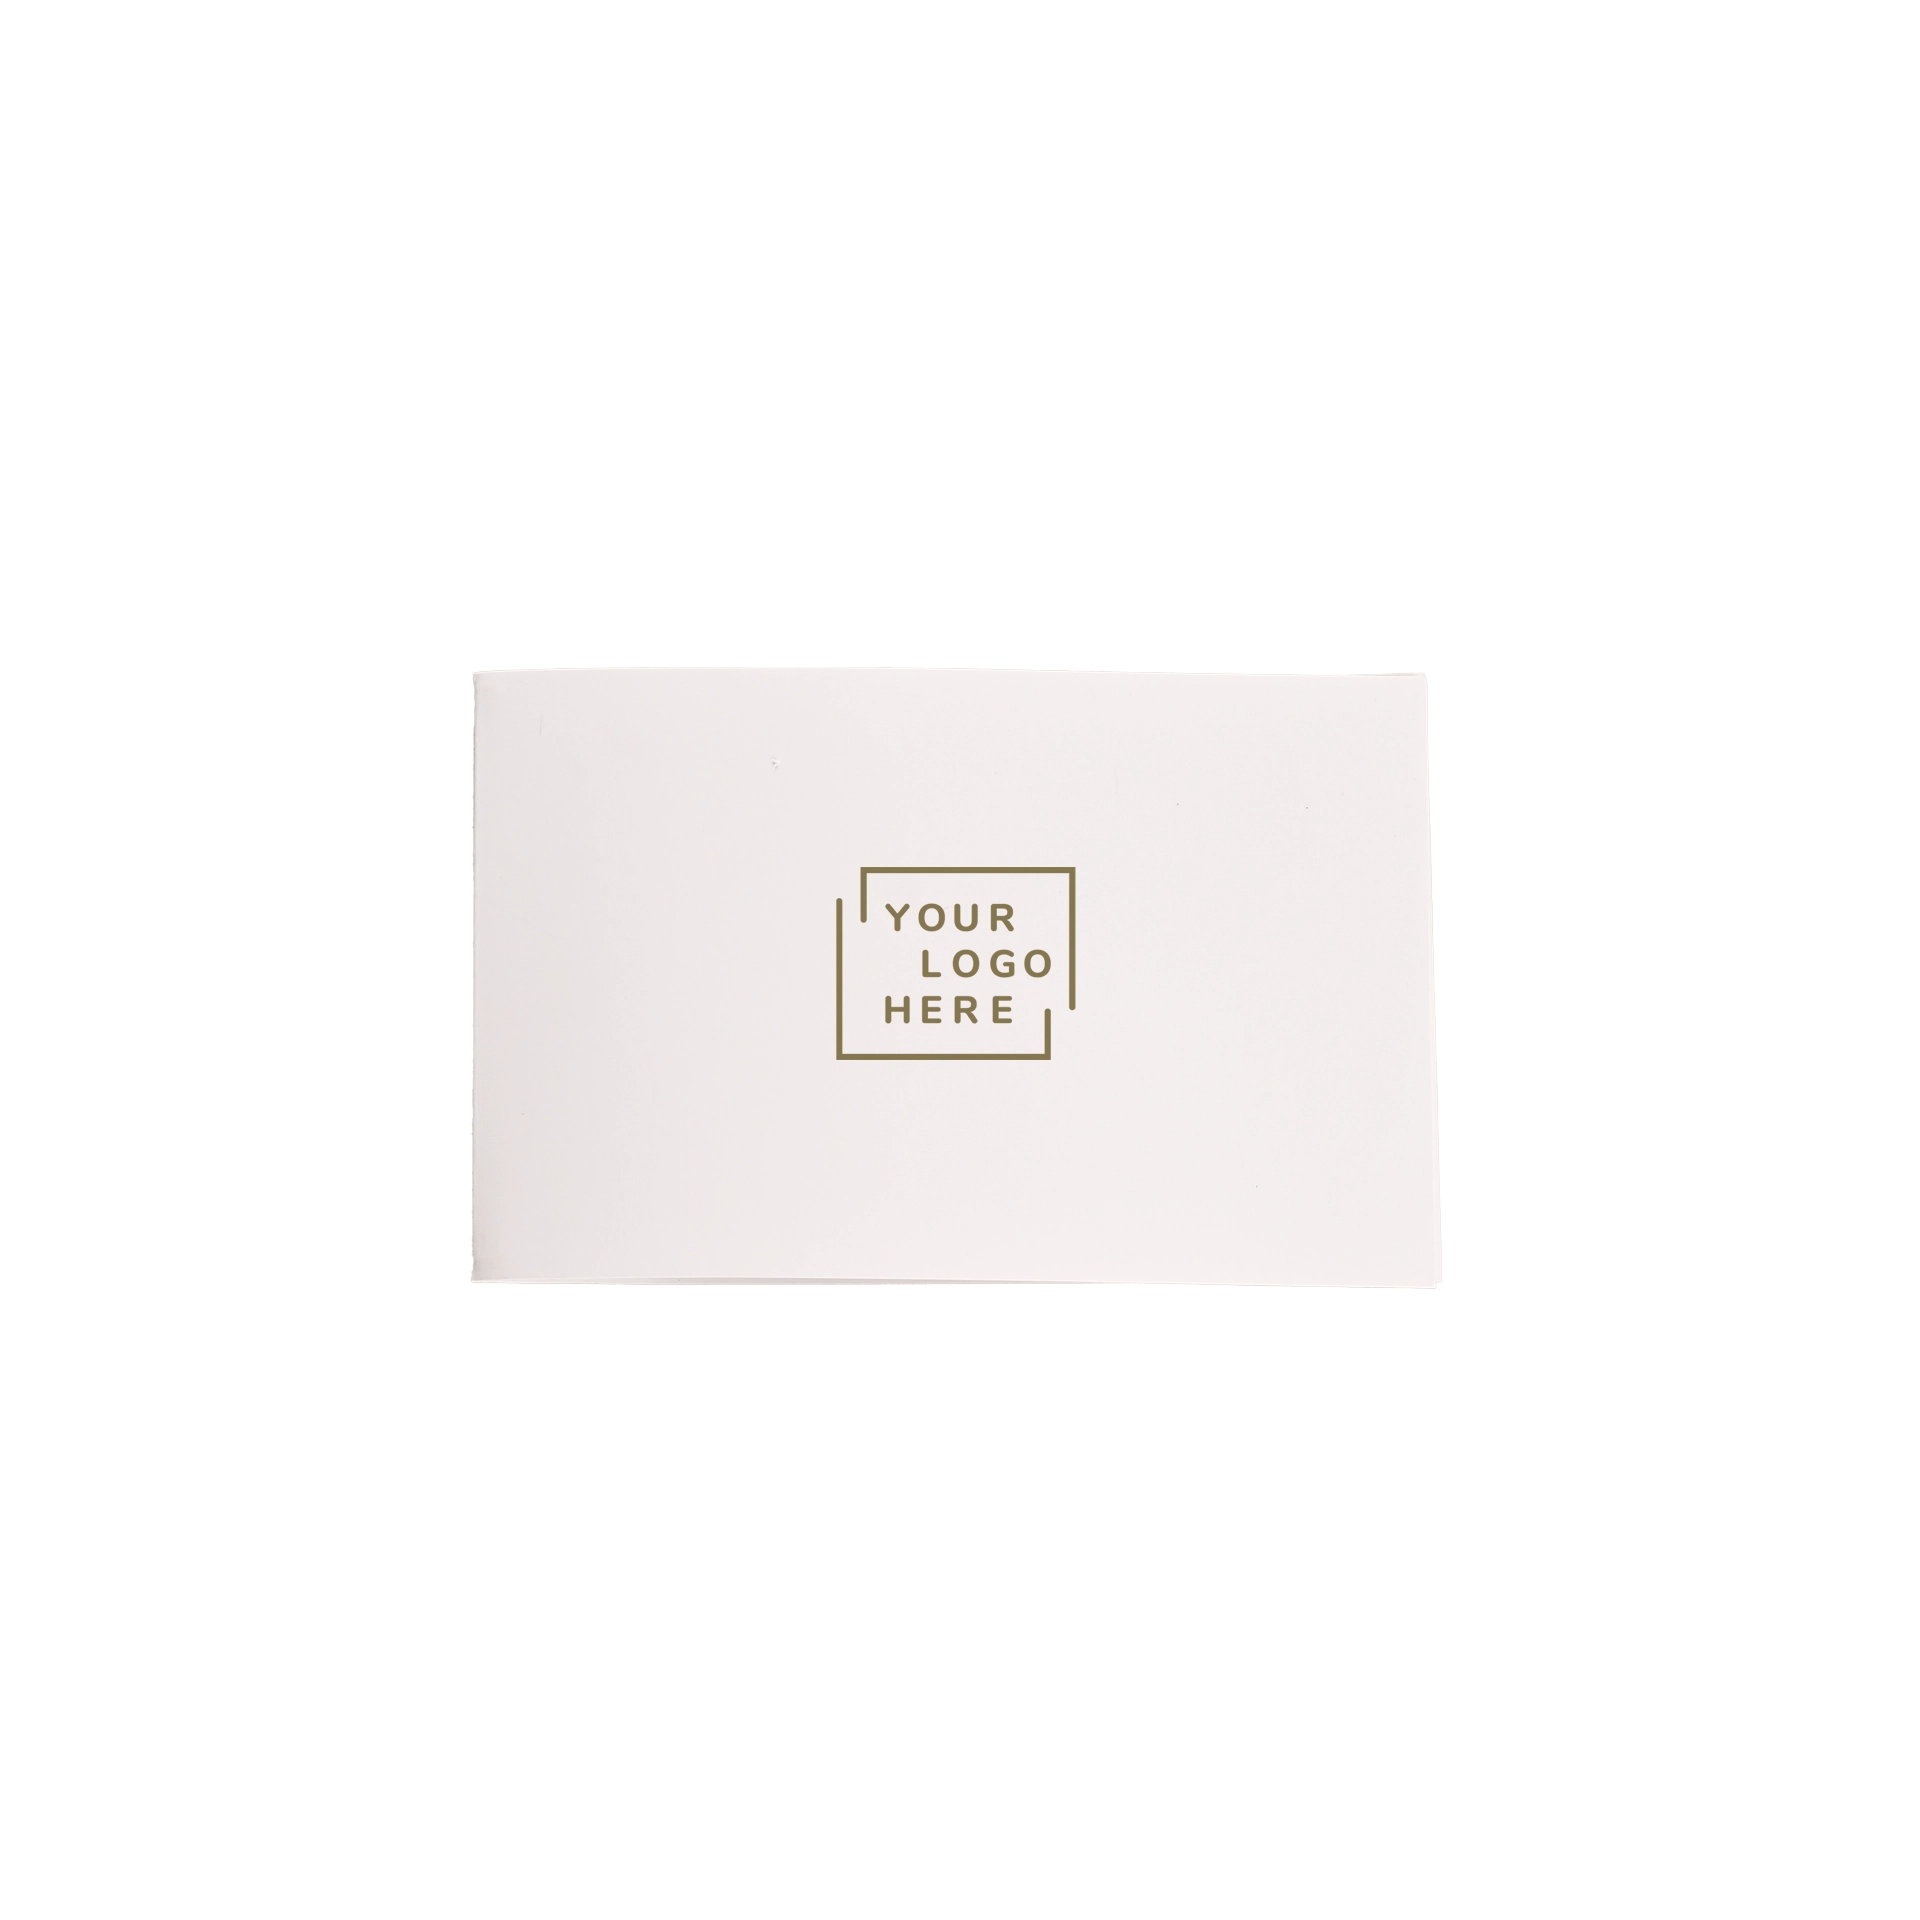 Astuccio keycard | E1 carta patinata opaca oppure carta uso mano